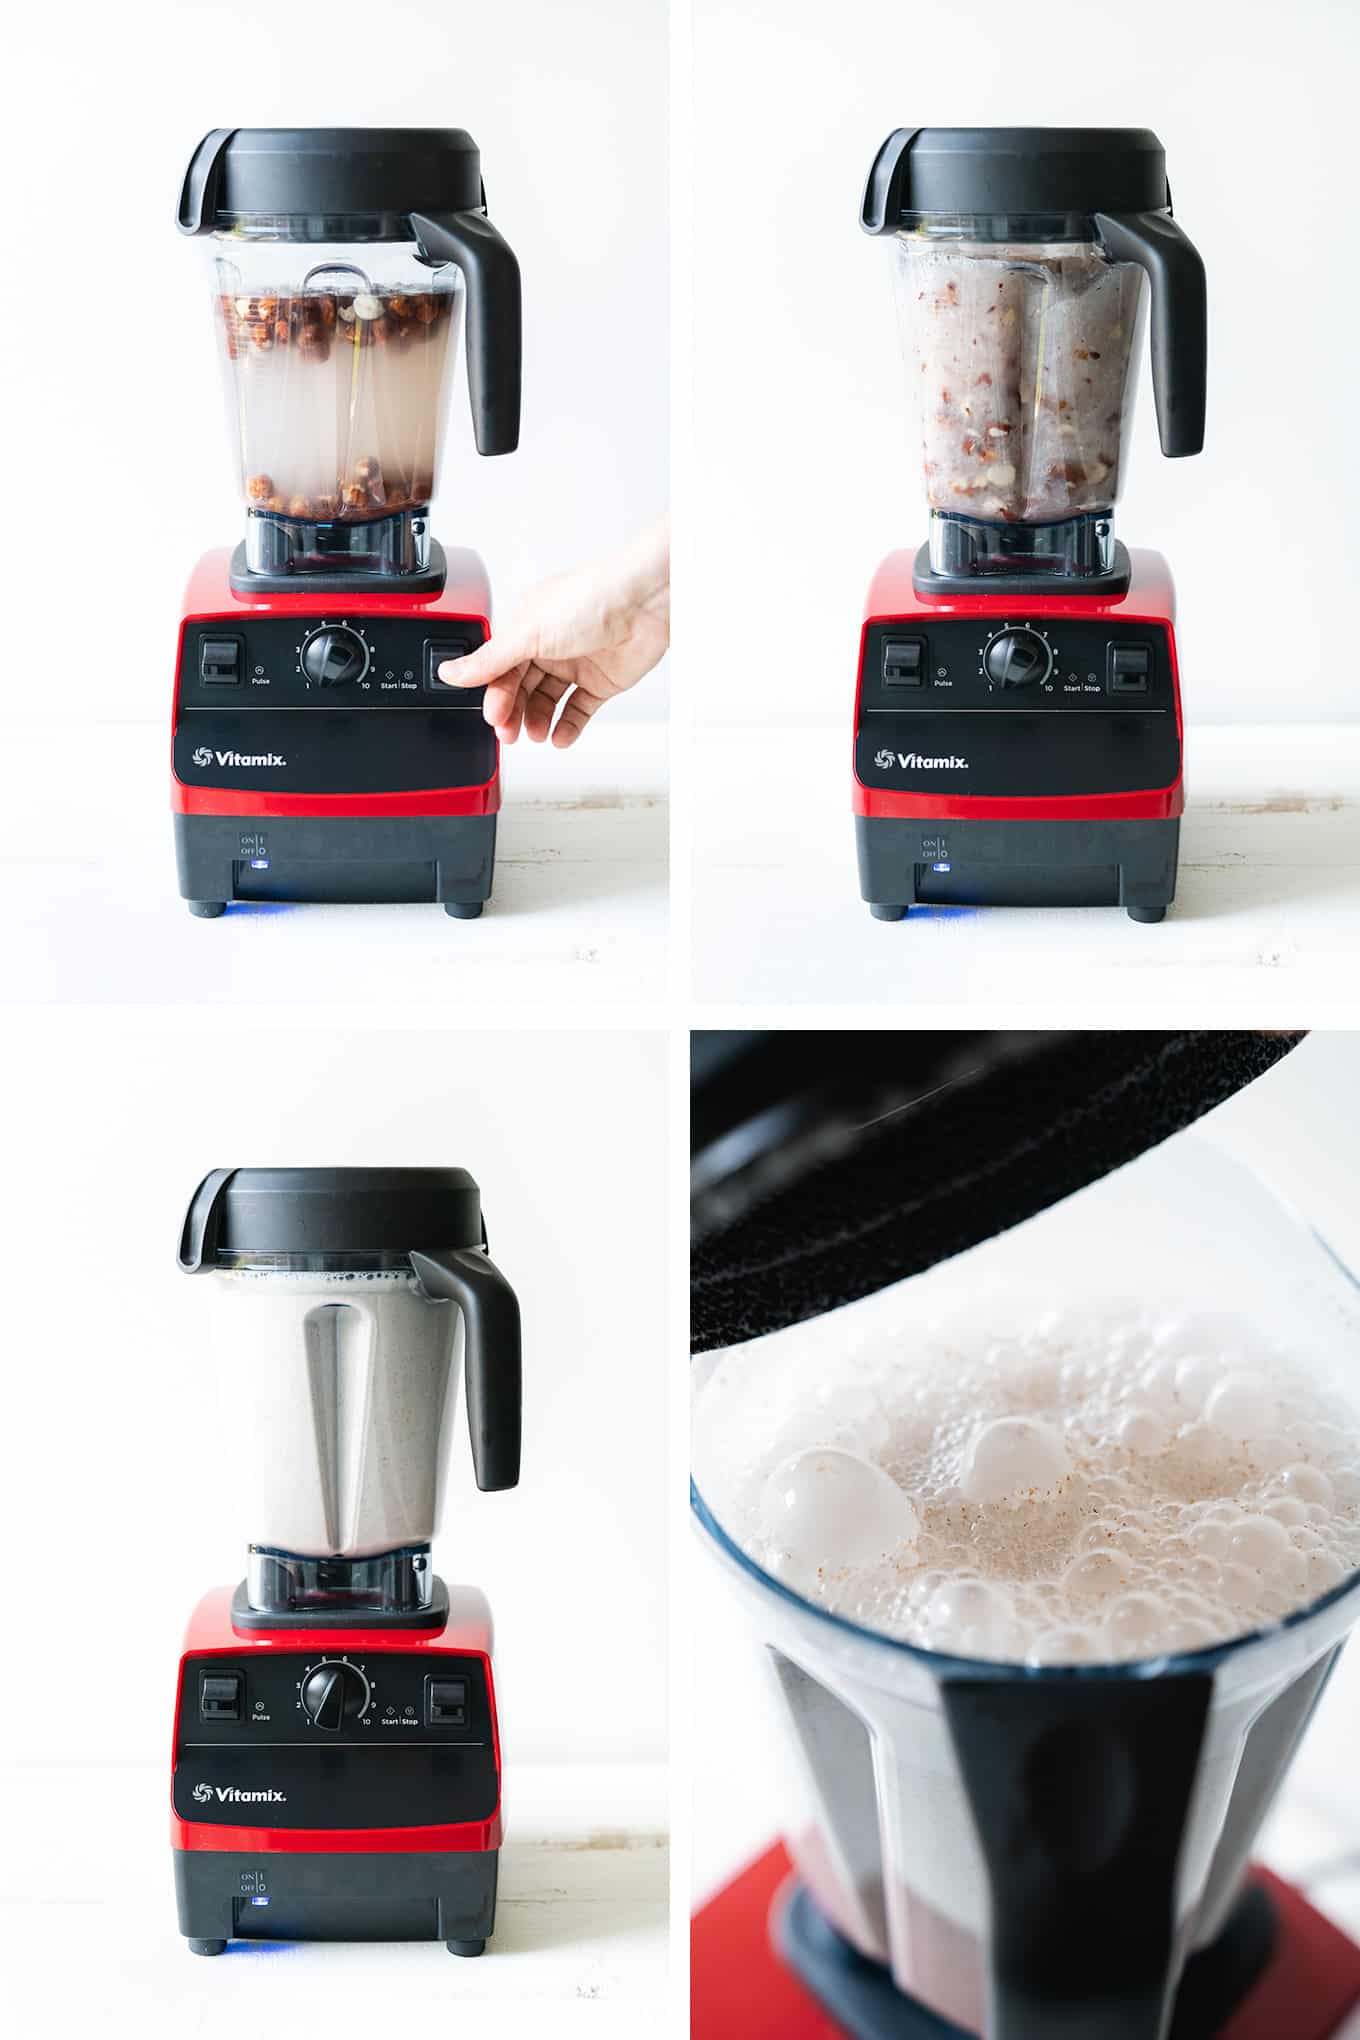 Four stages of blending nut milk, three blender images and one open blender image